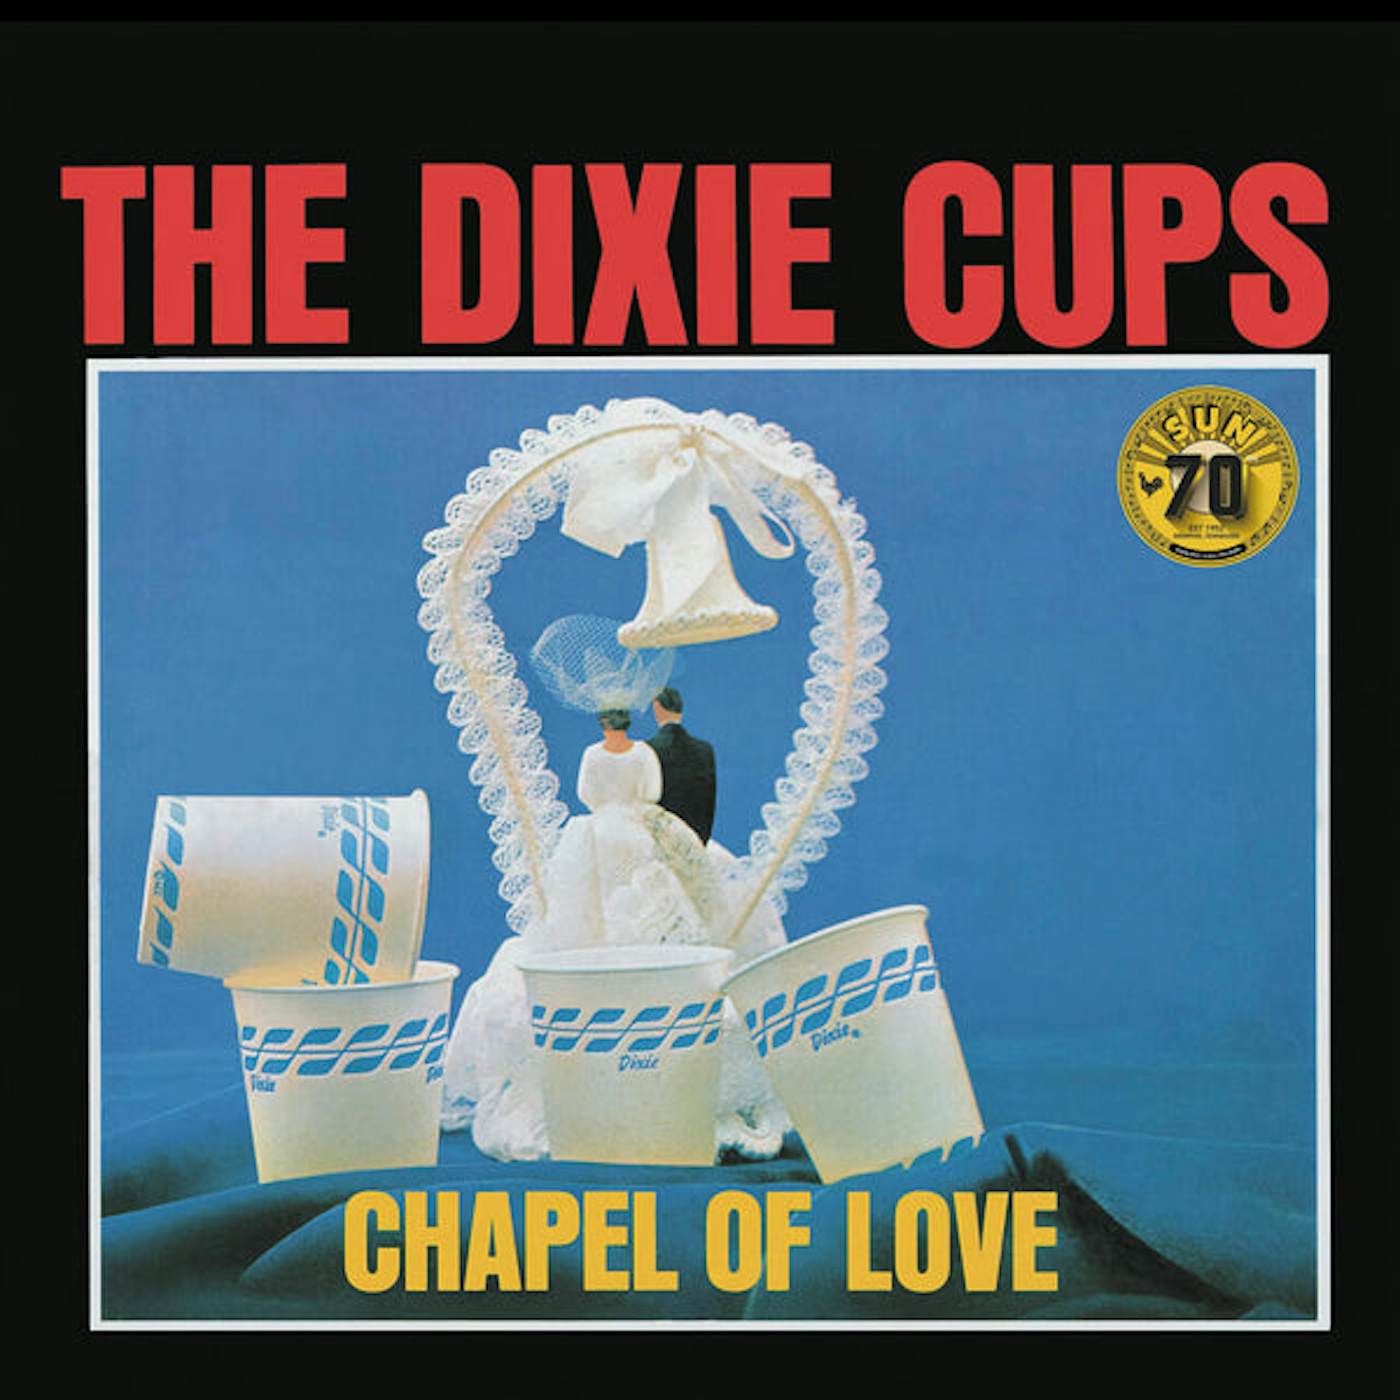 The Dixie Cups Chapel of Love (Sun Records 70th Anniversary) vinyl record